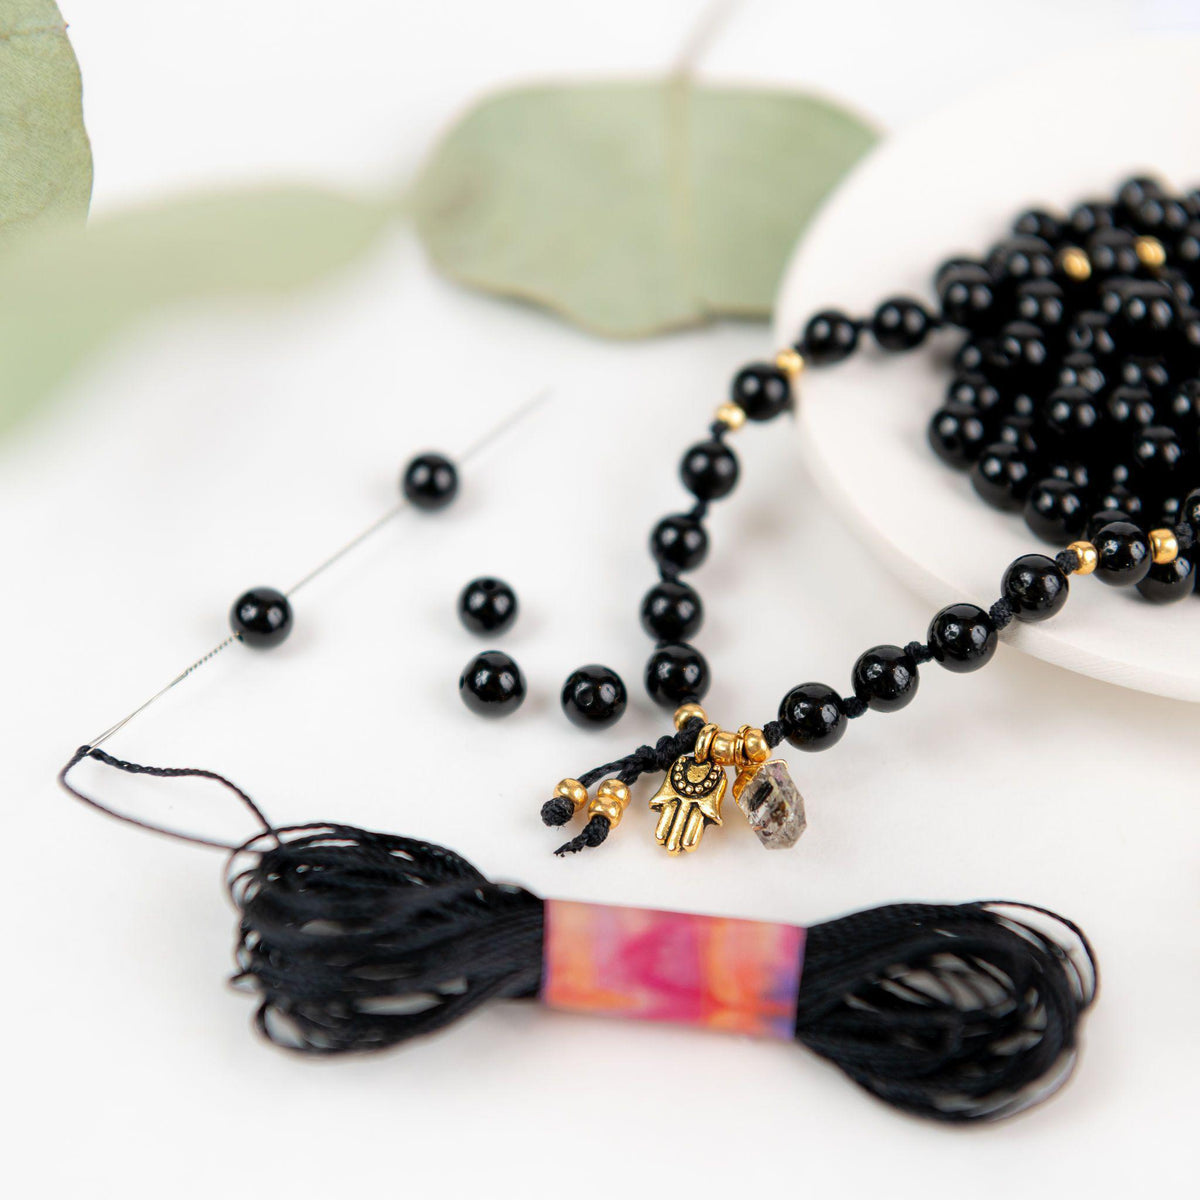 black tourmaline mala beads and healing crystals handmade by merakalpa malas